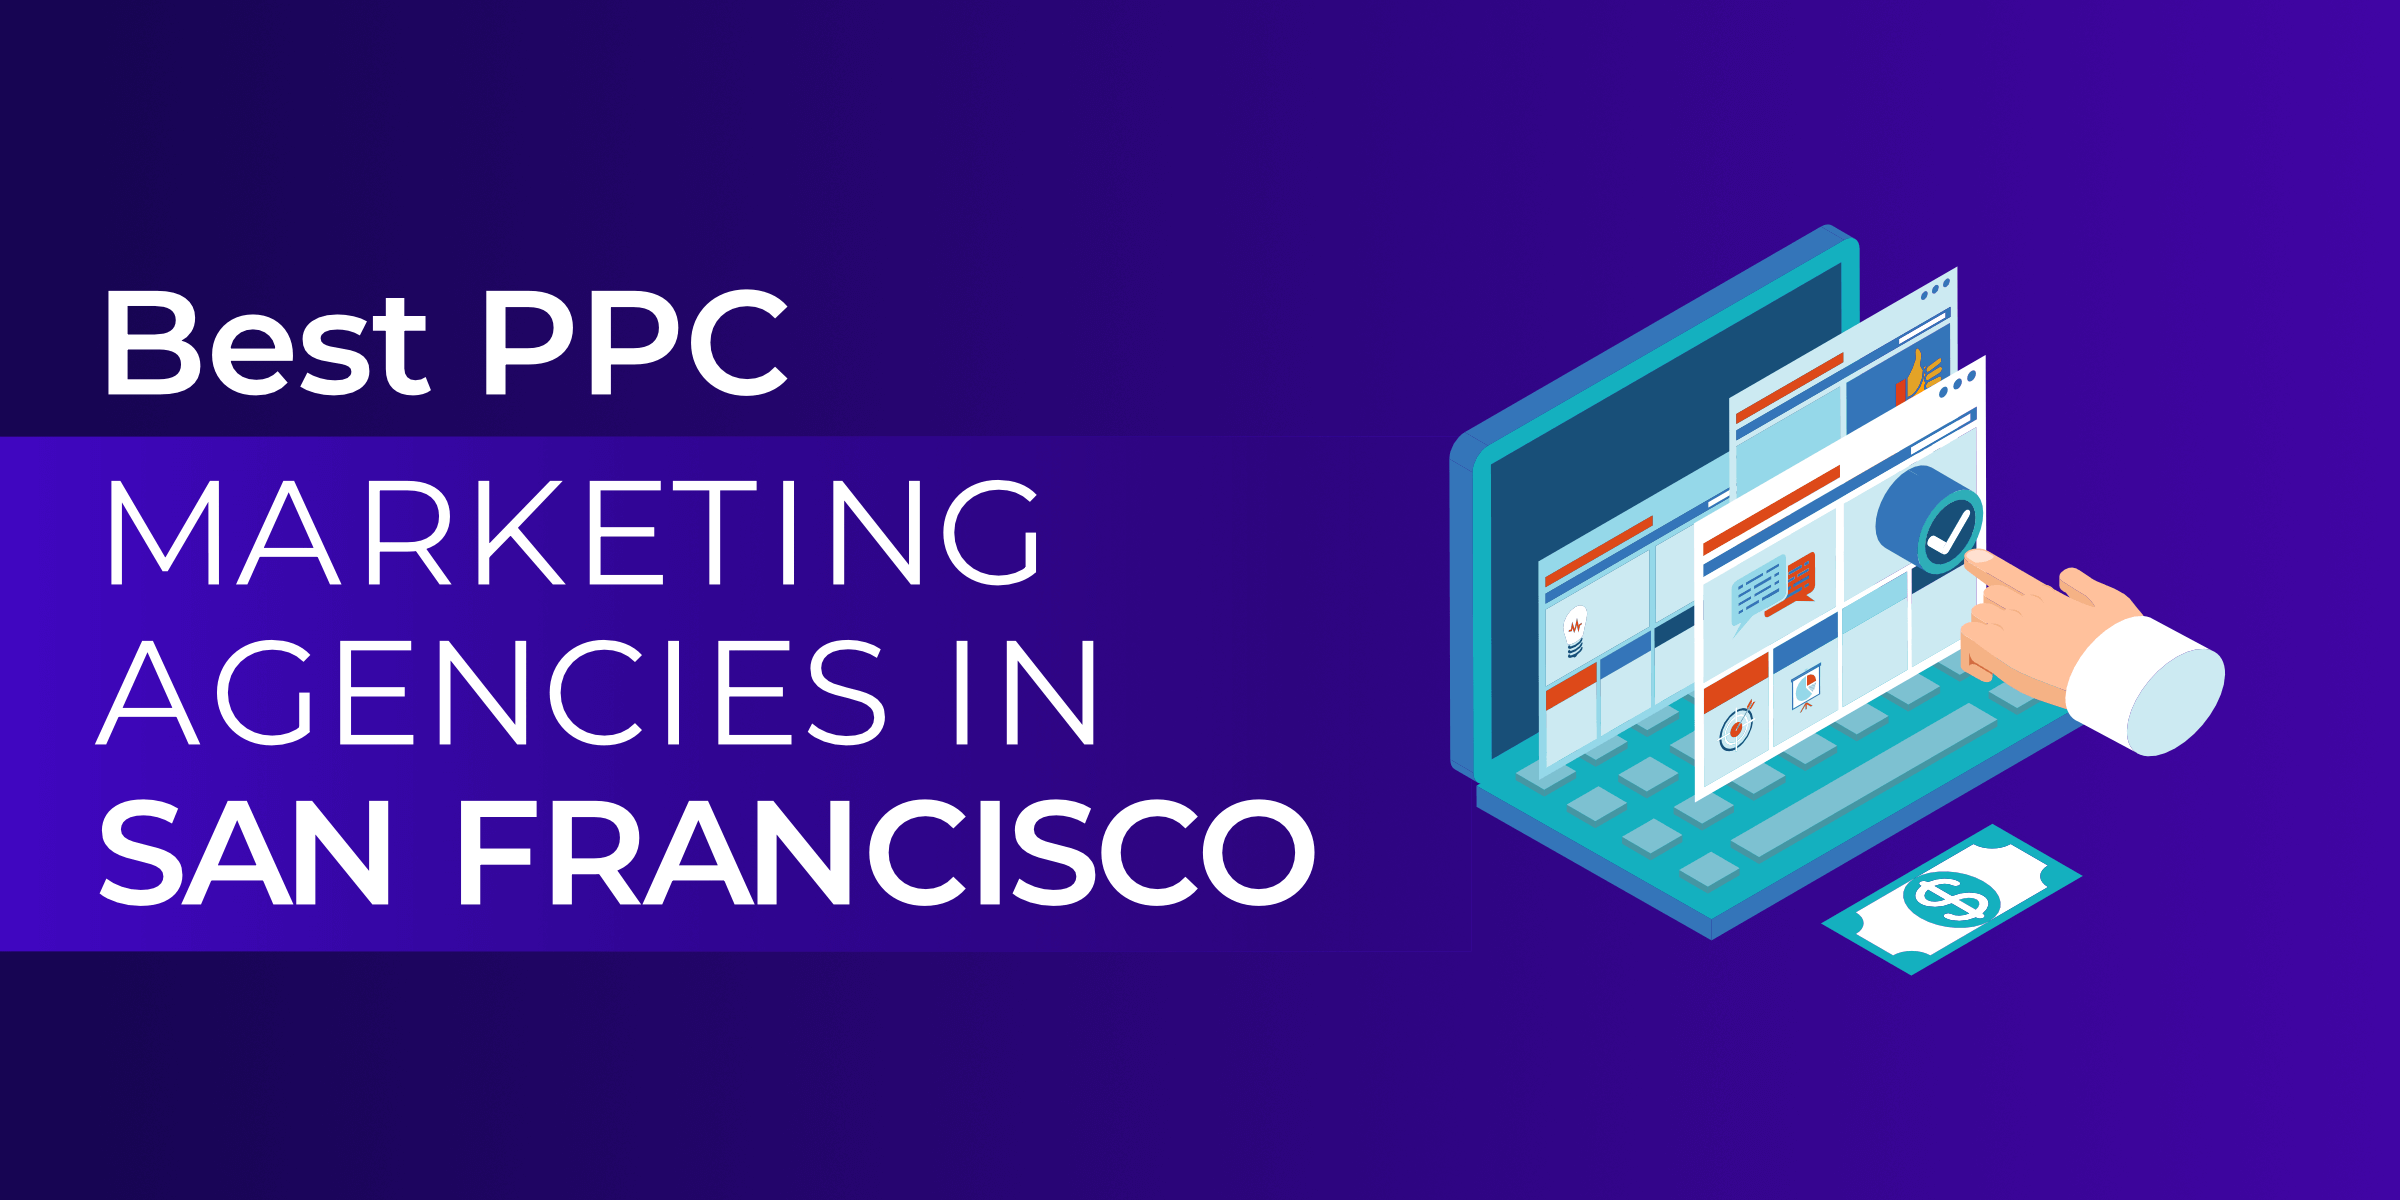 Best PPC Marketing Agencies in San Francisco